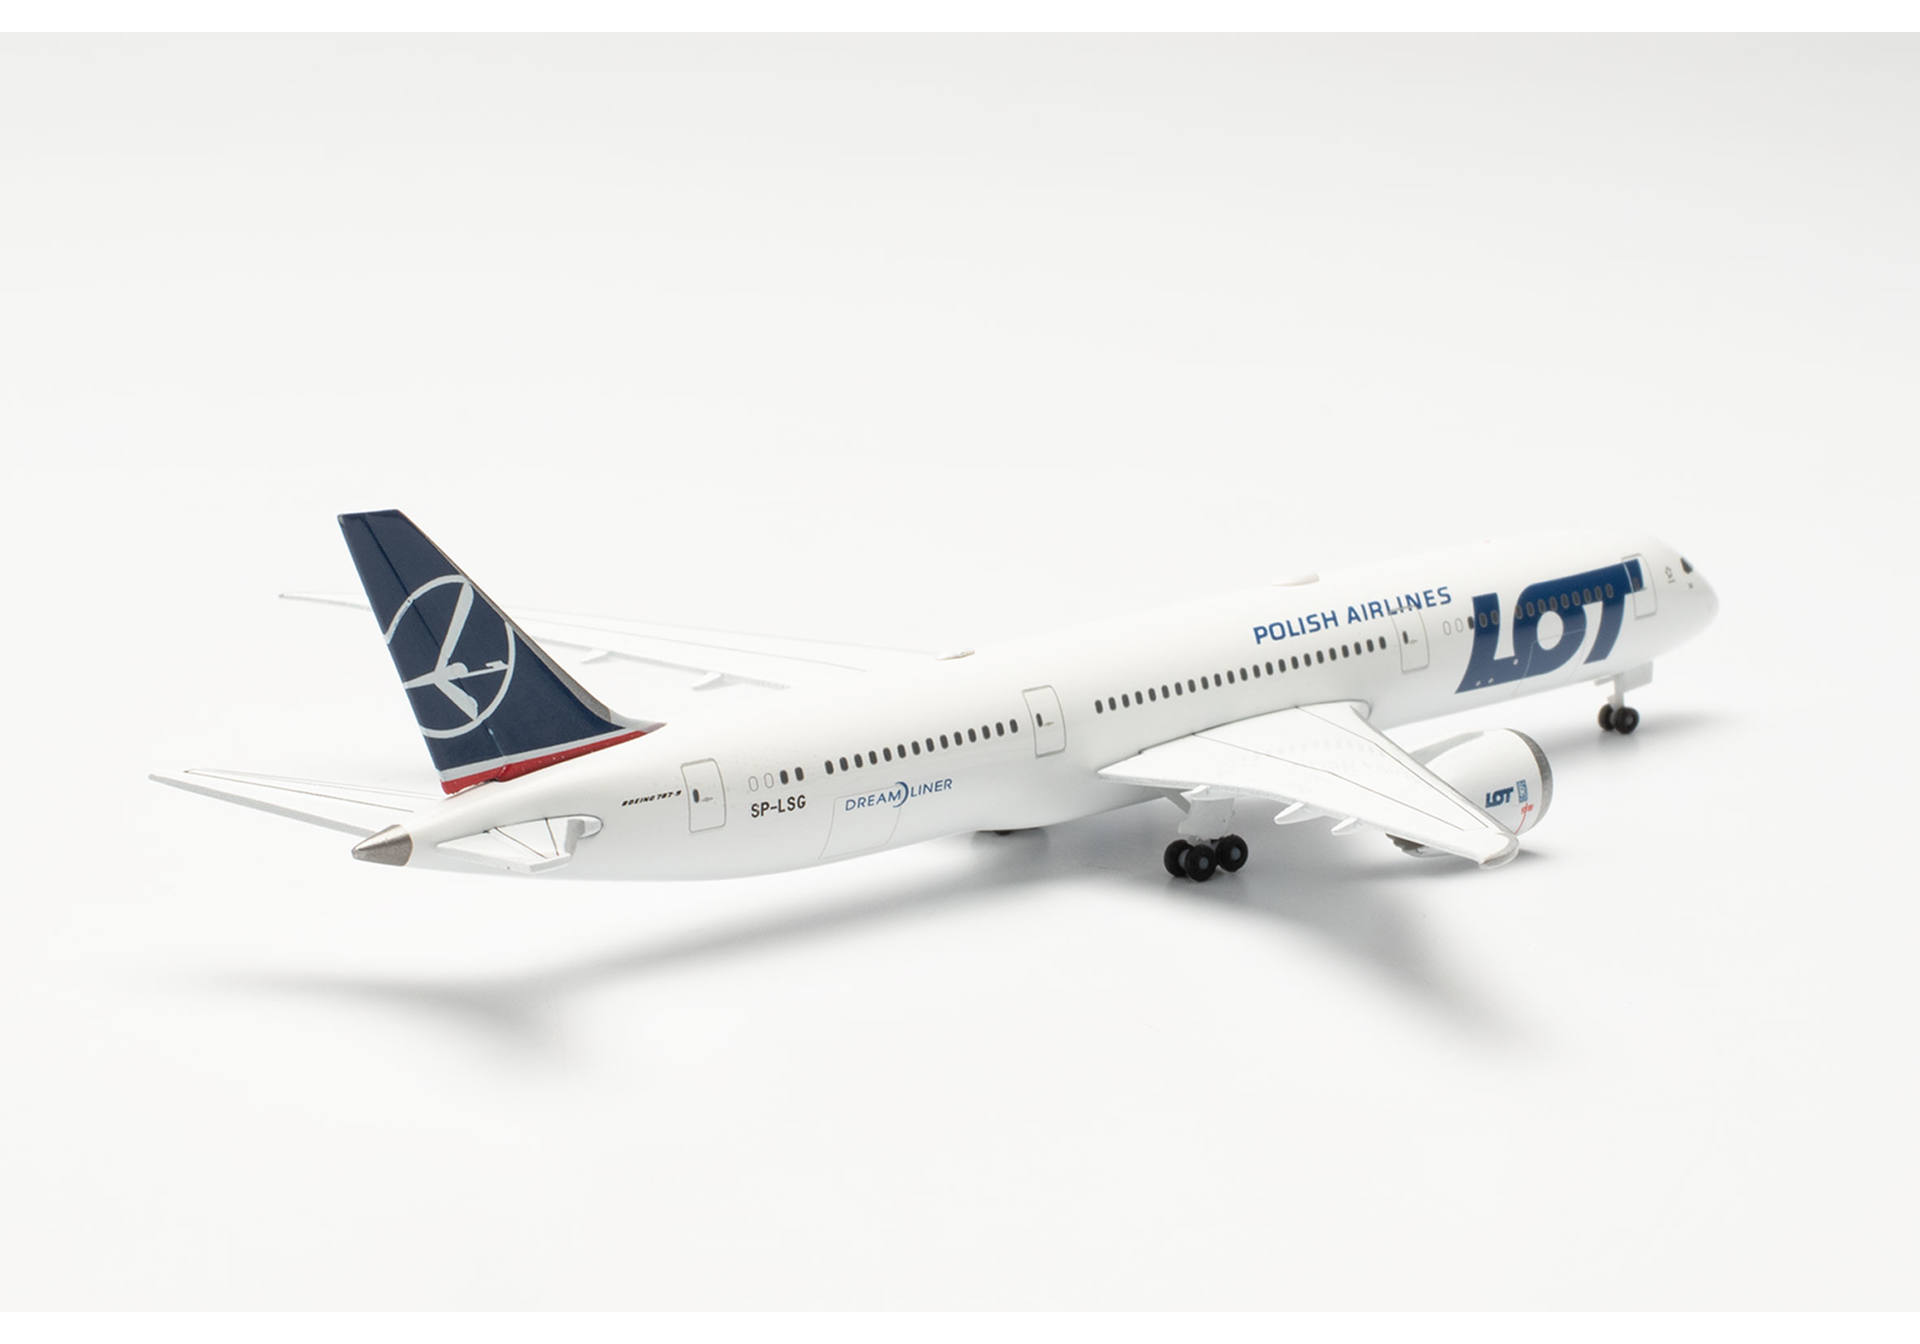 LOT Polish Airlines Boeing 787-9 Dreamliner – SP-LSG